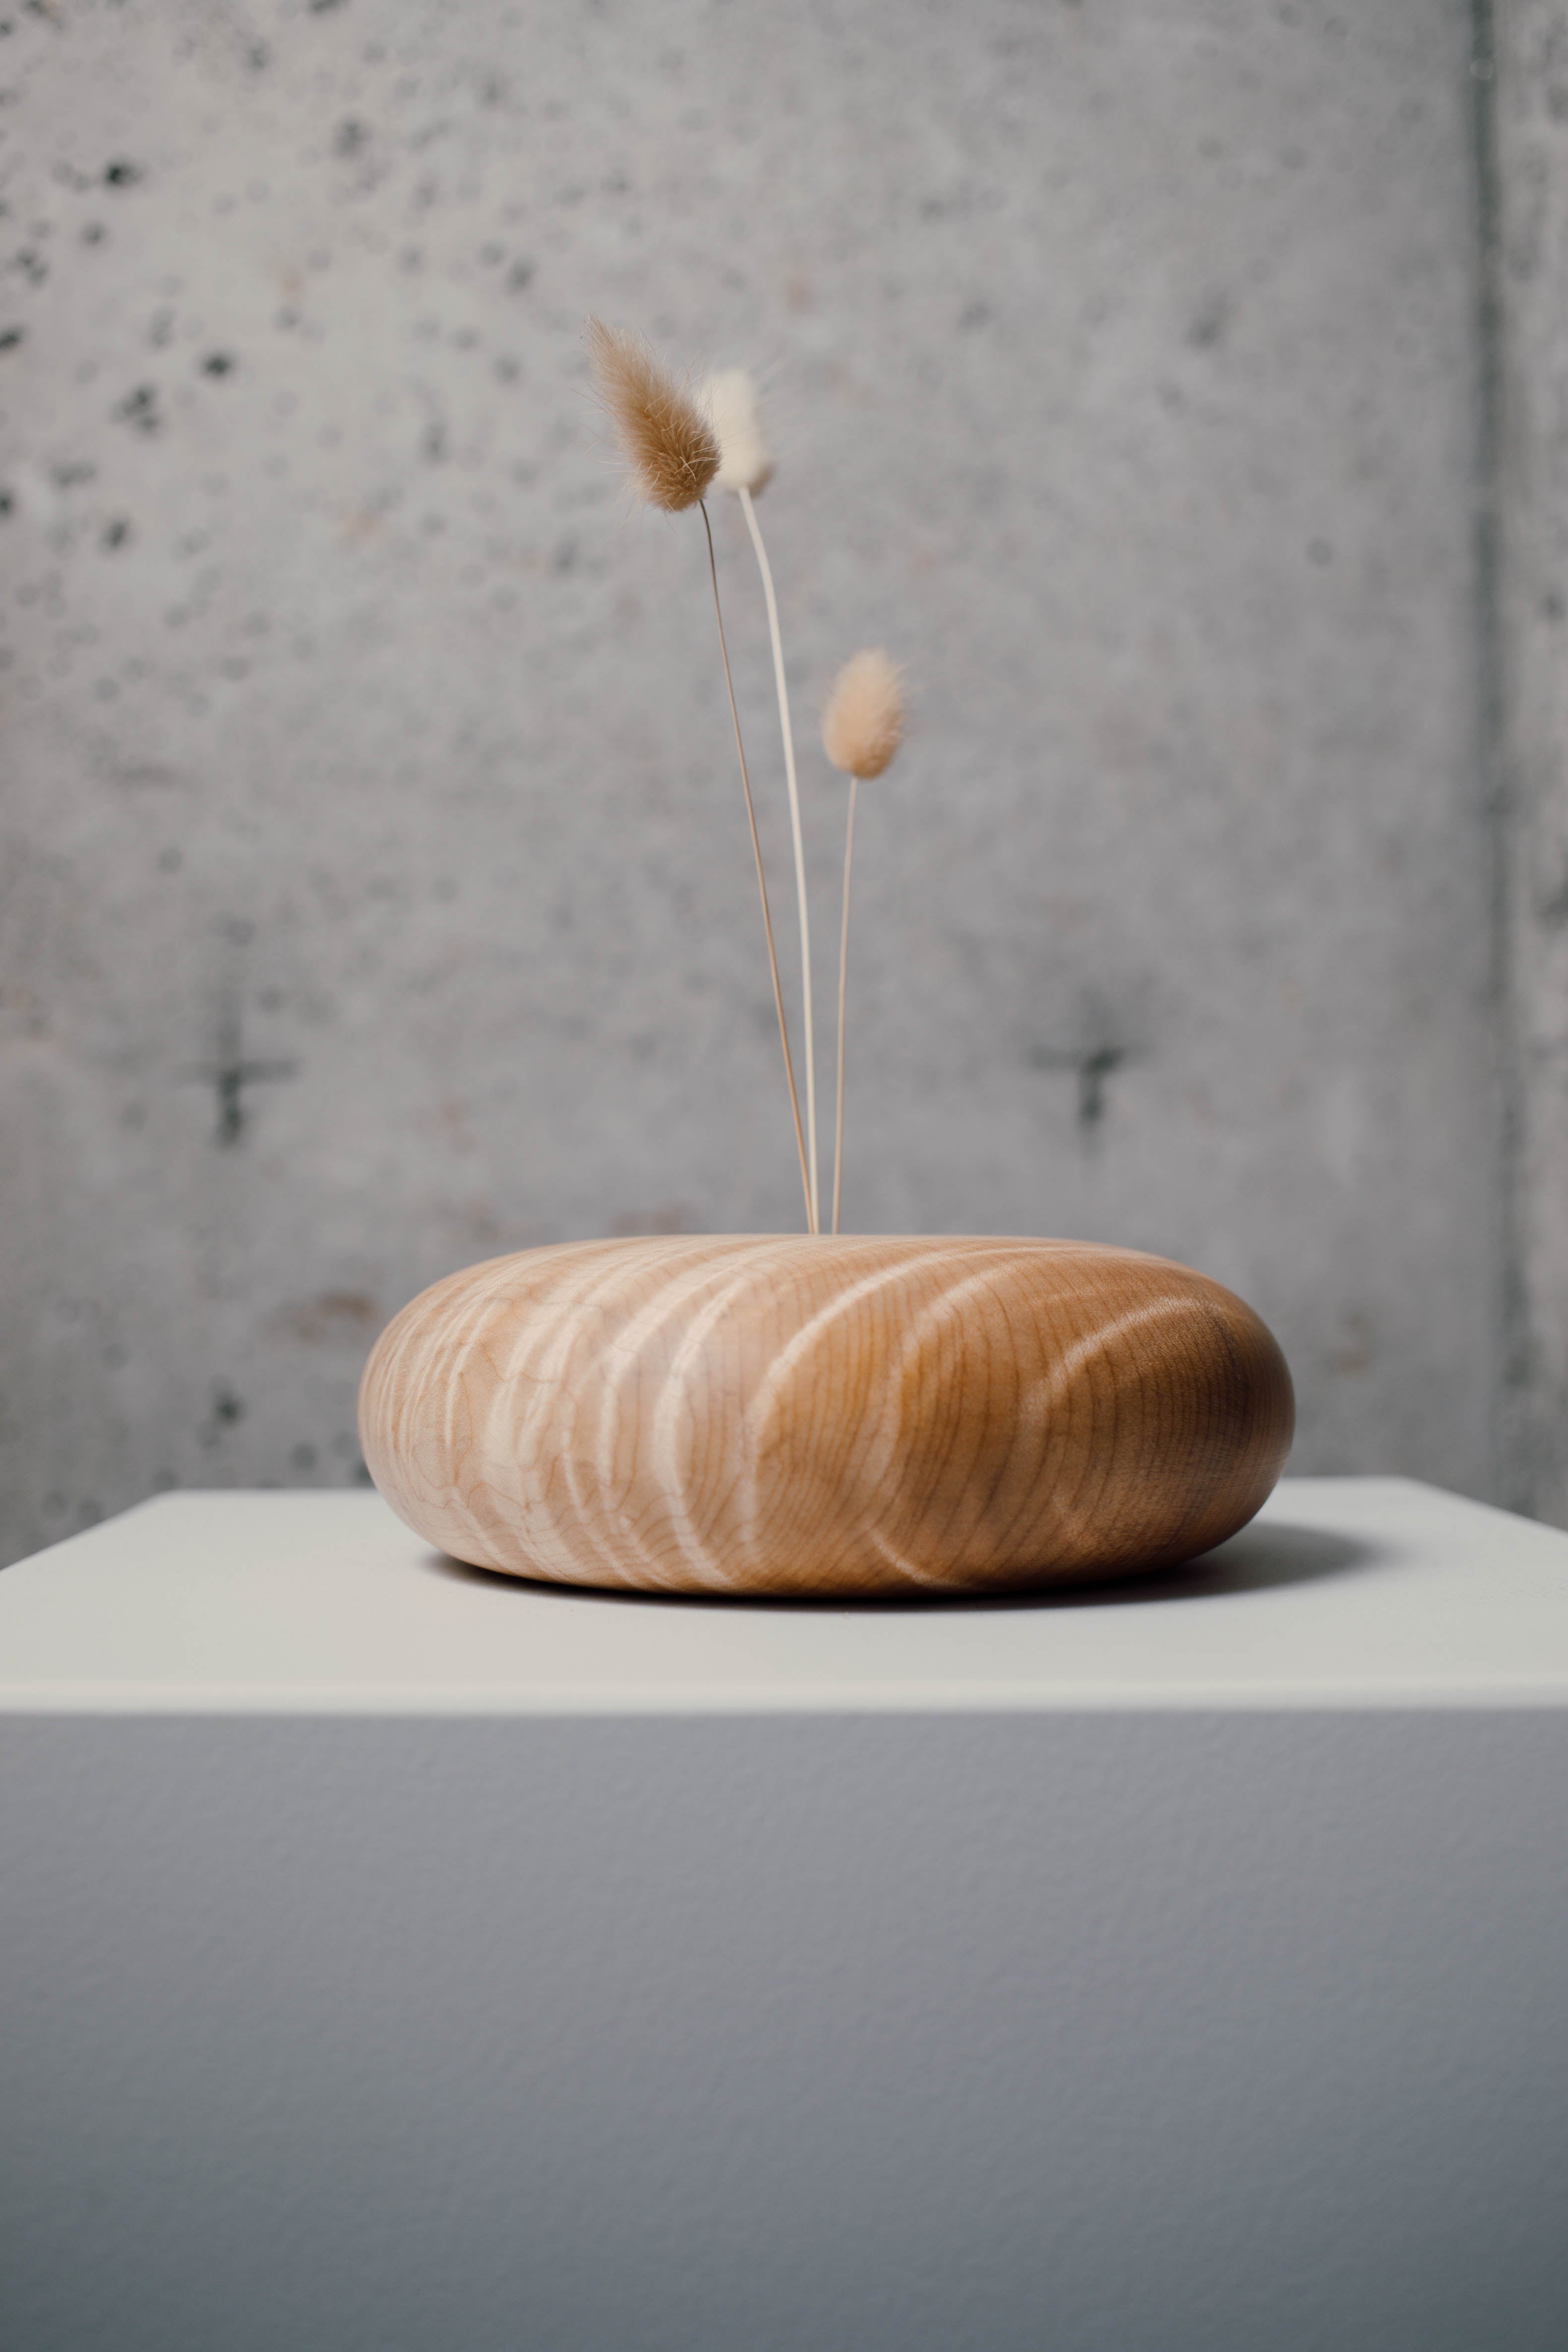 round pebble shaped budvase handmade from wood by modern wood designer Jackie Chapman